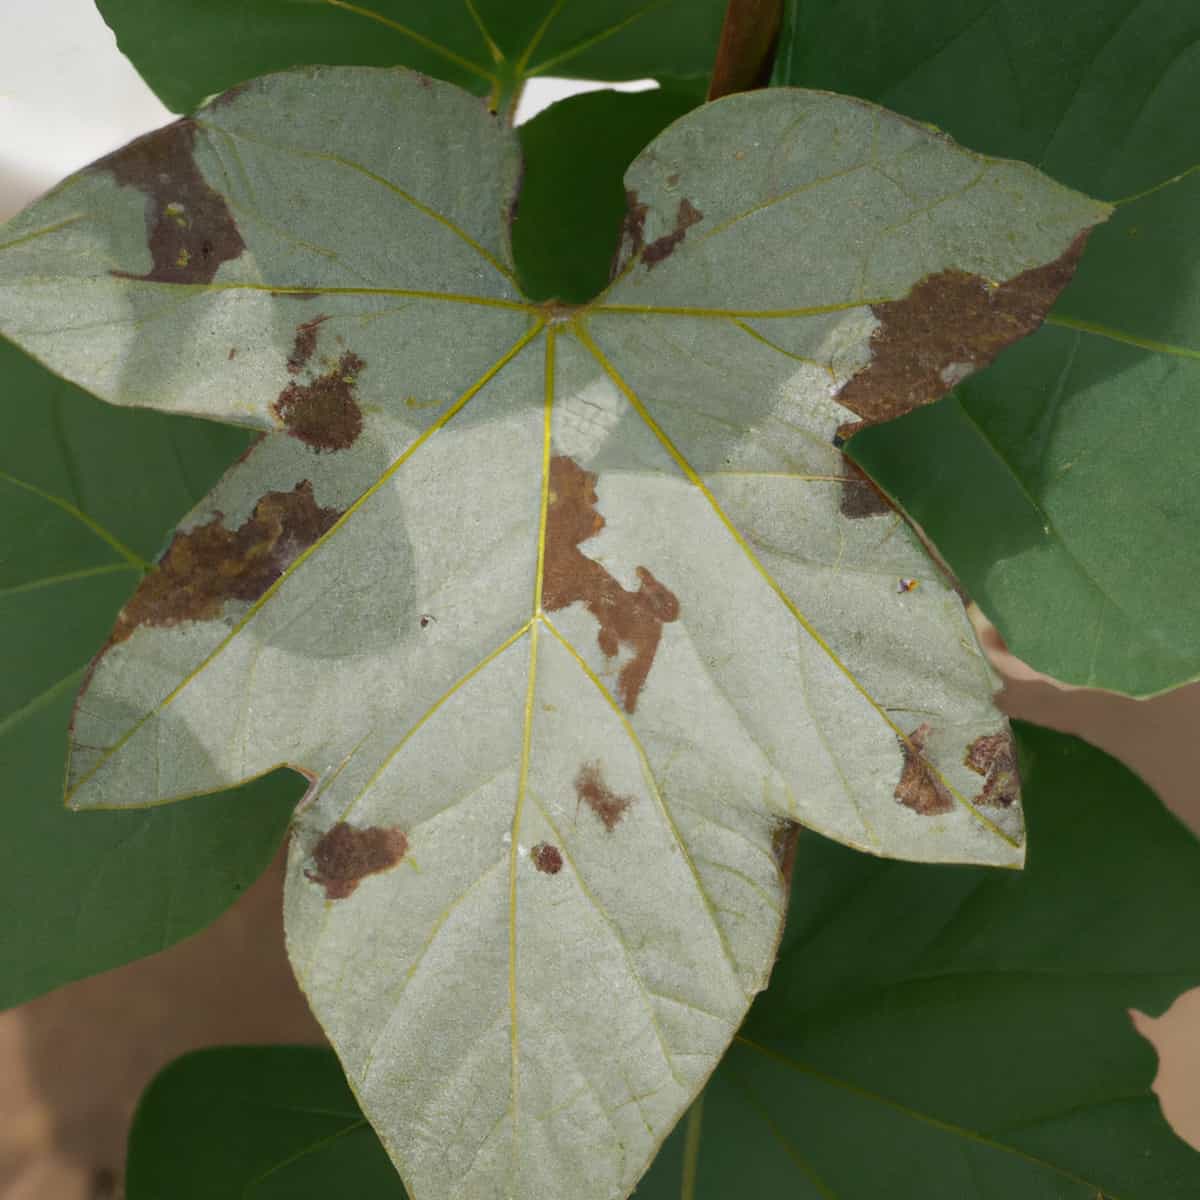 Alterneria leaf blight Management in Cotton
